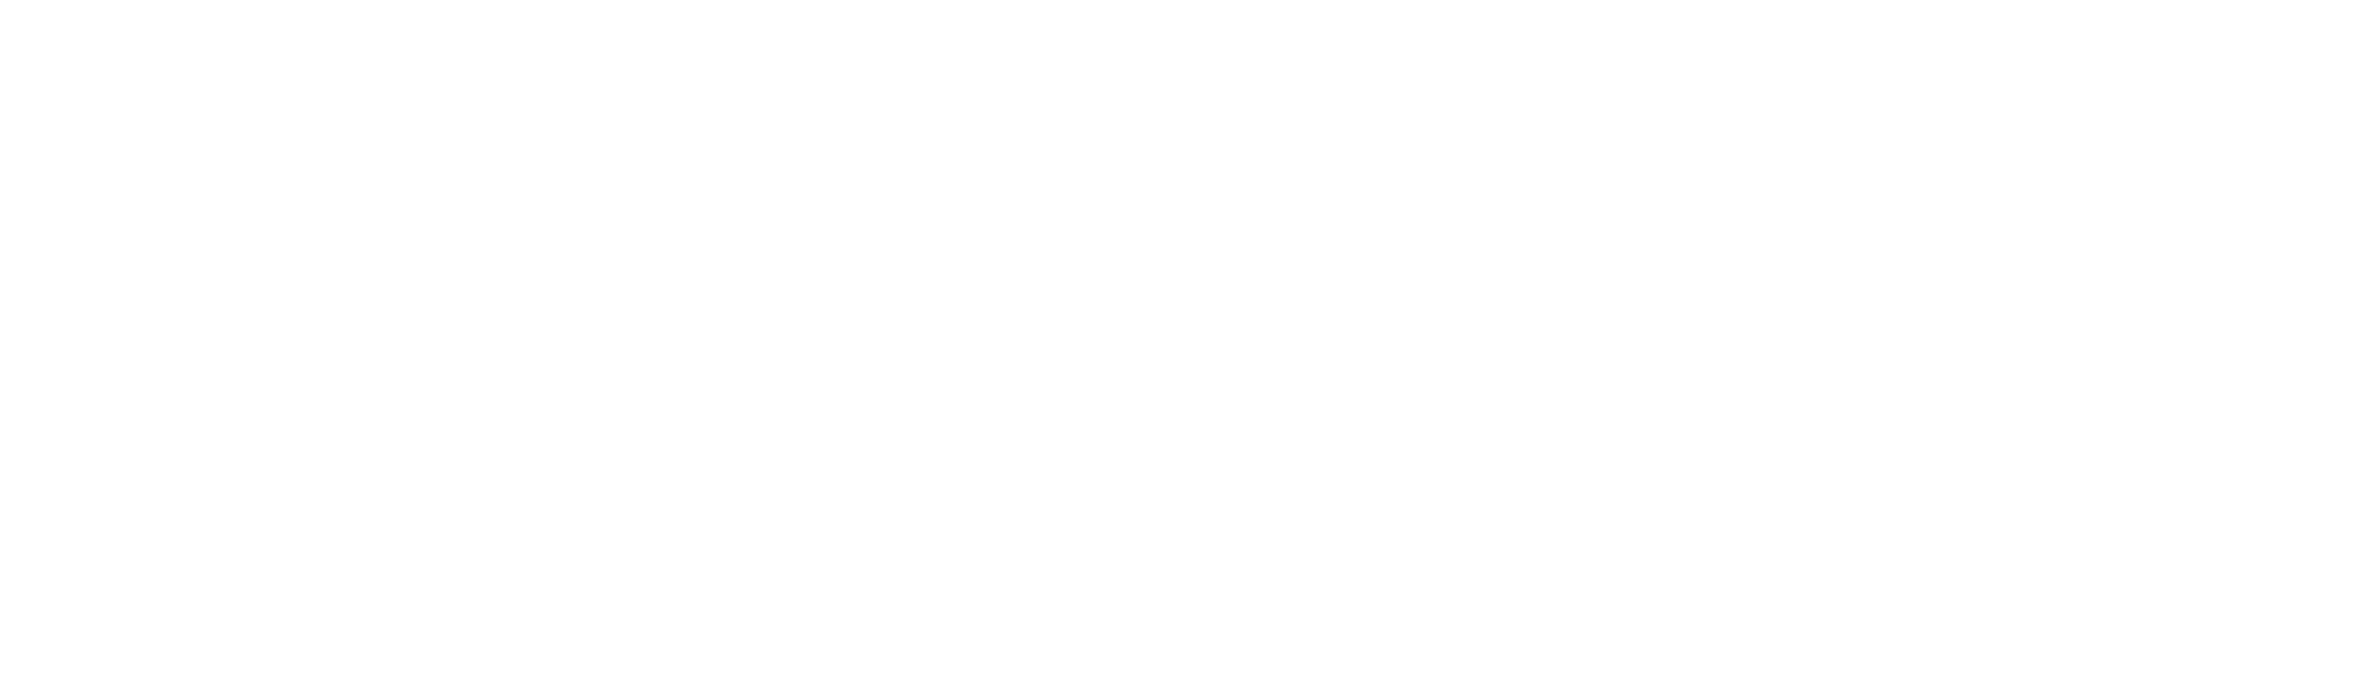 Talented-Recruitment-Group-Logo-White